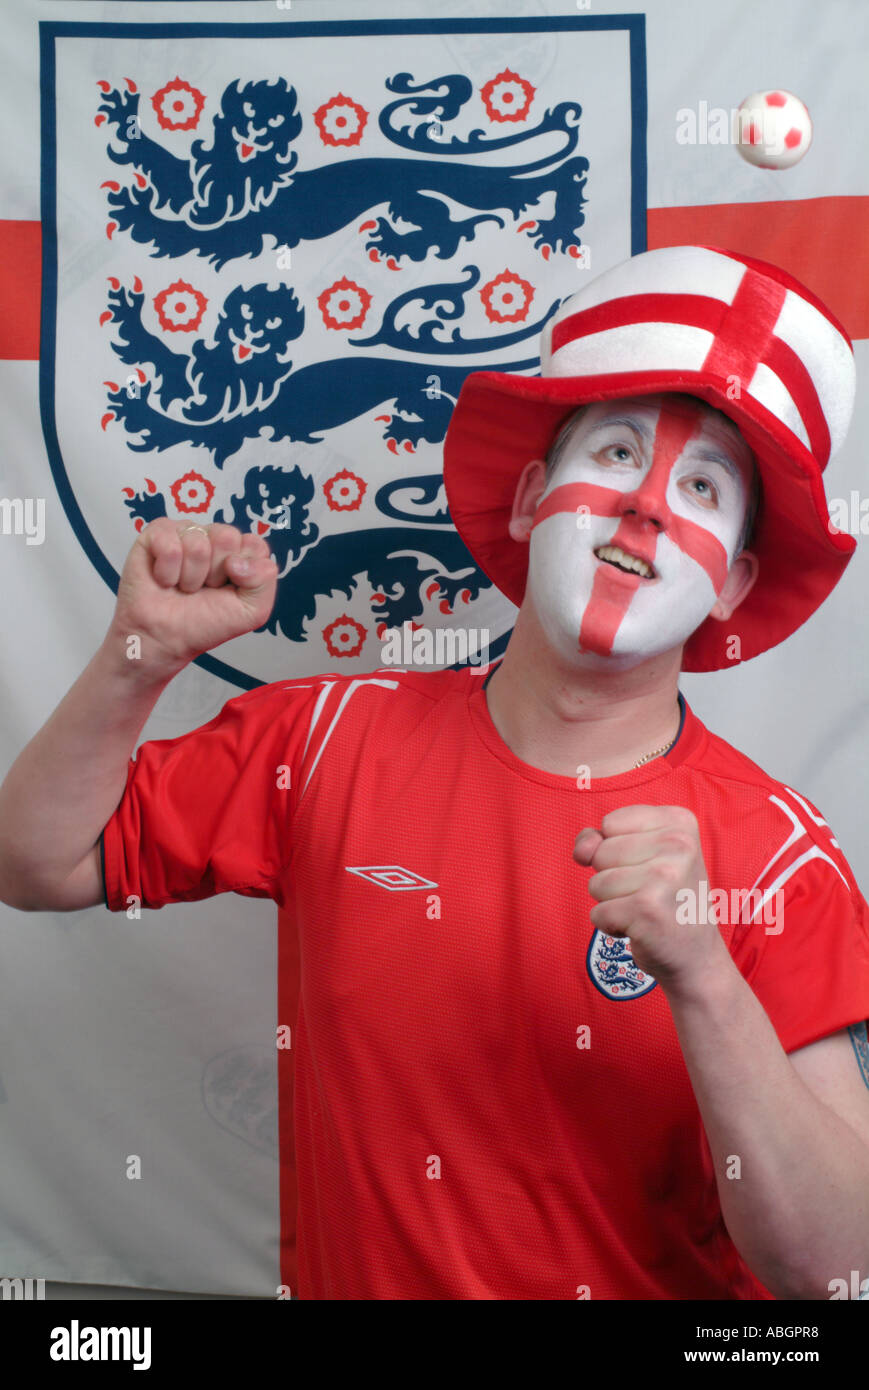 england football fan Stock Photo